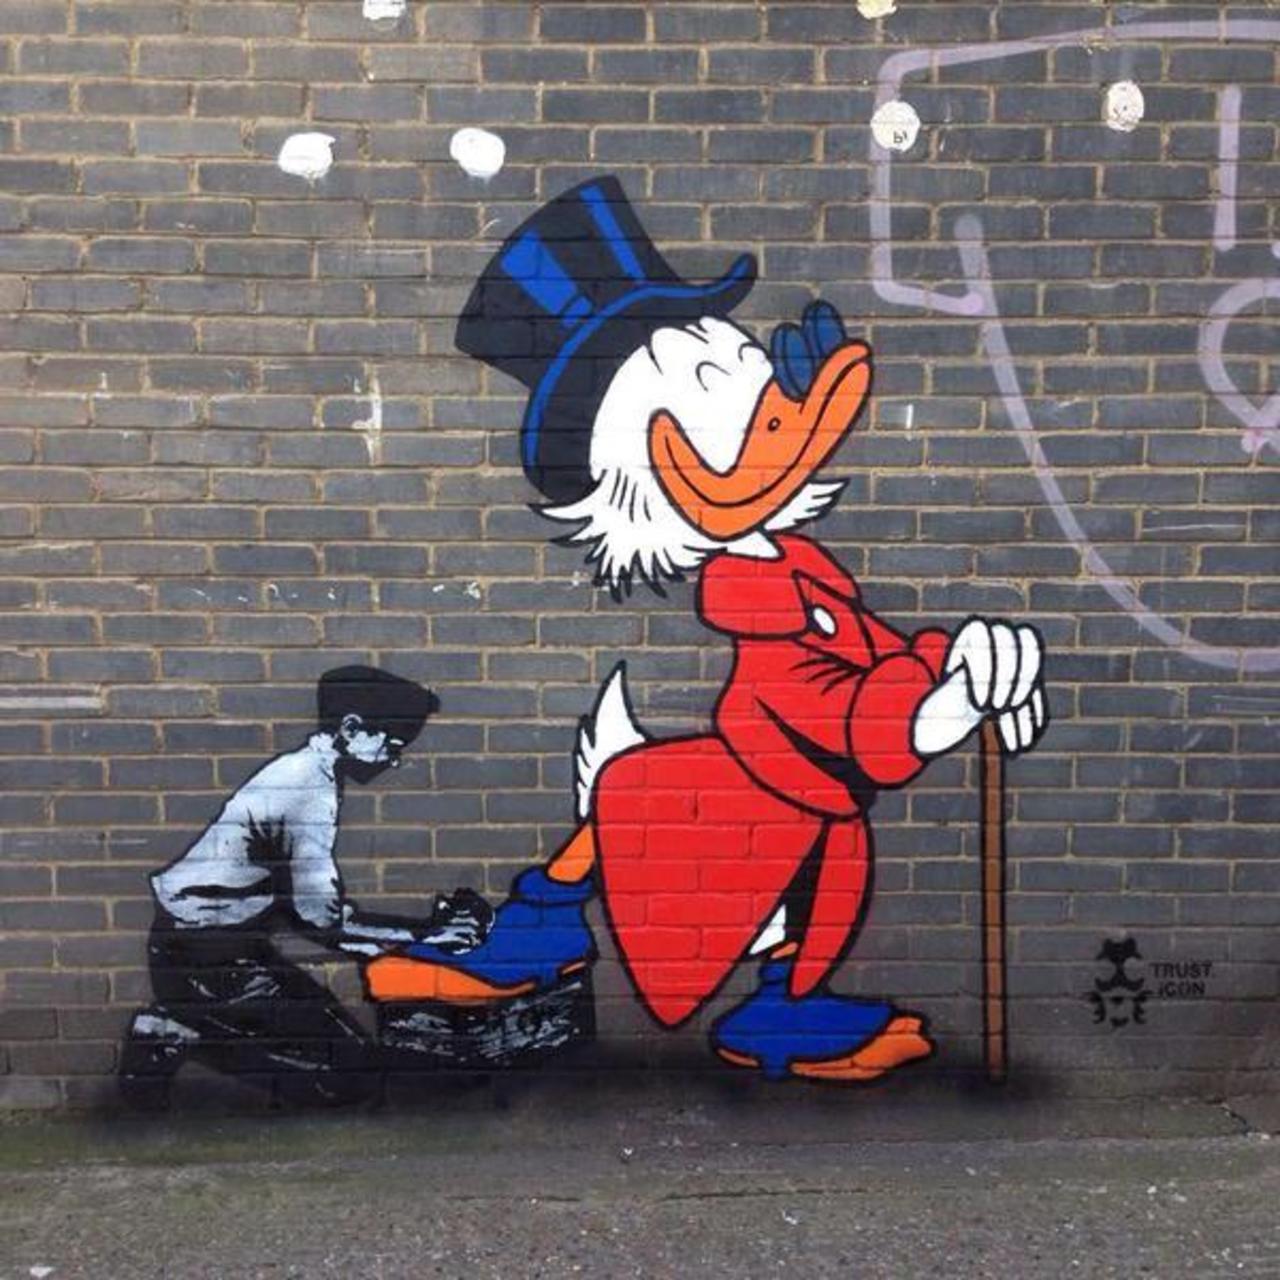 'Shine Box' 
New Street Art by iCON in Bethnal Green, London 

#art #arte #graffiti #streetart http://t.co/TOZvhoBl7b